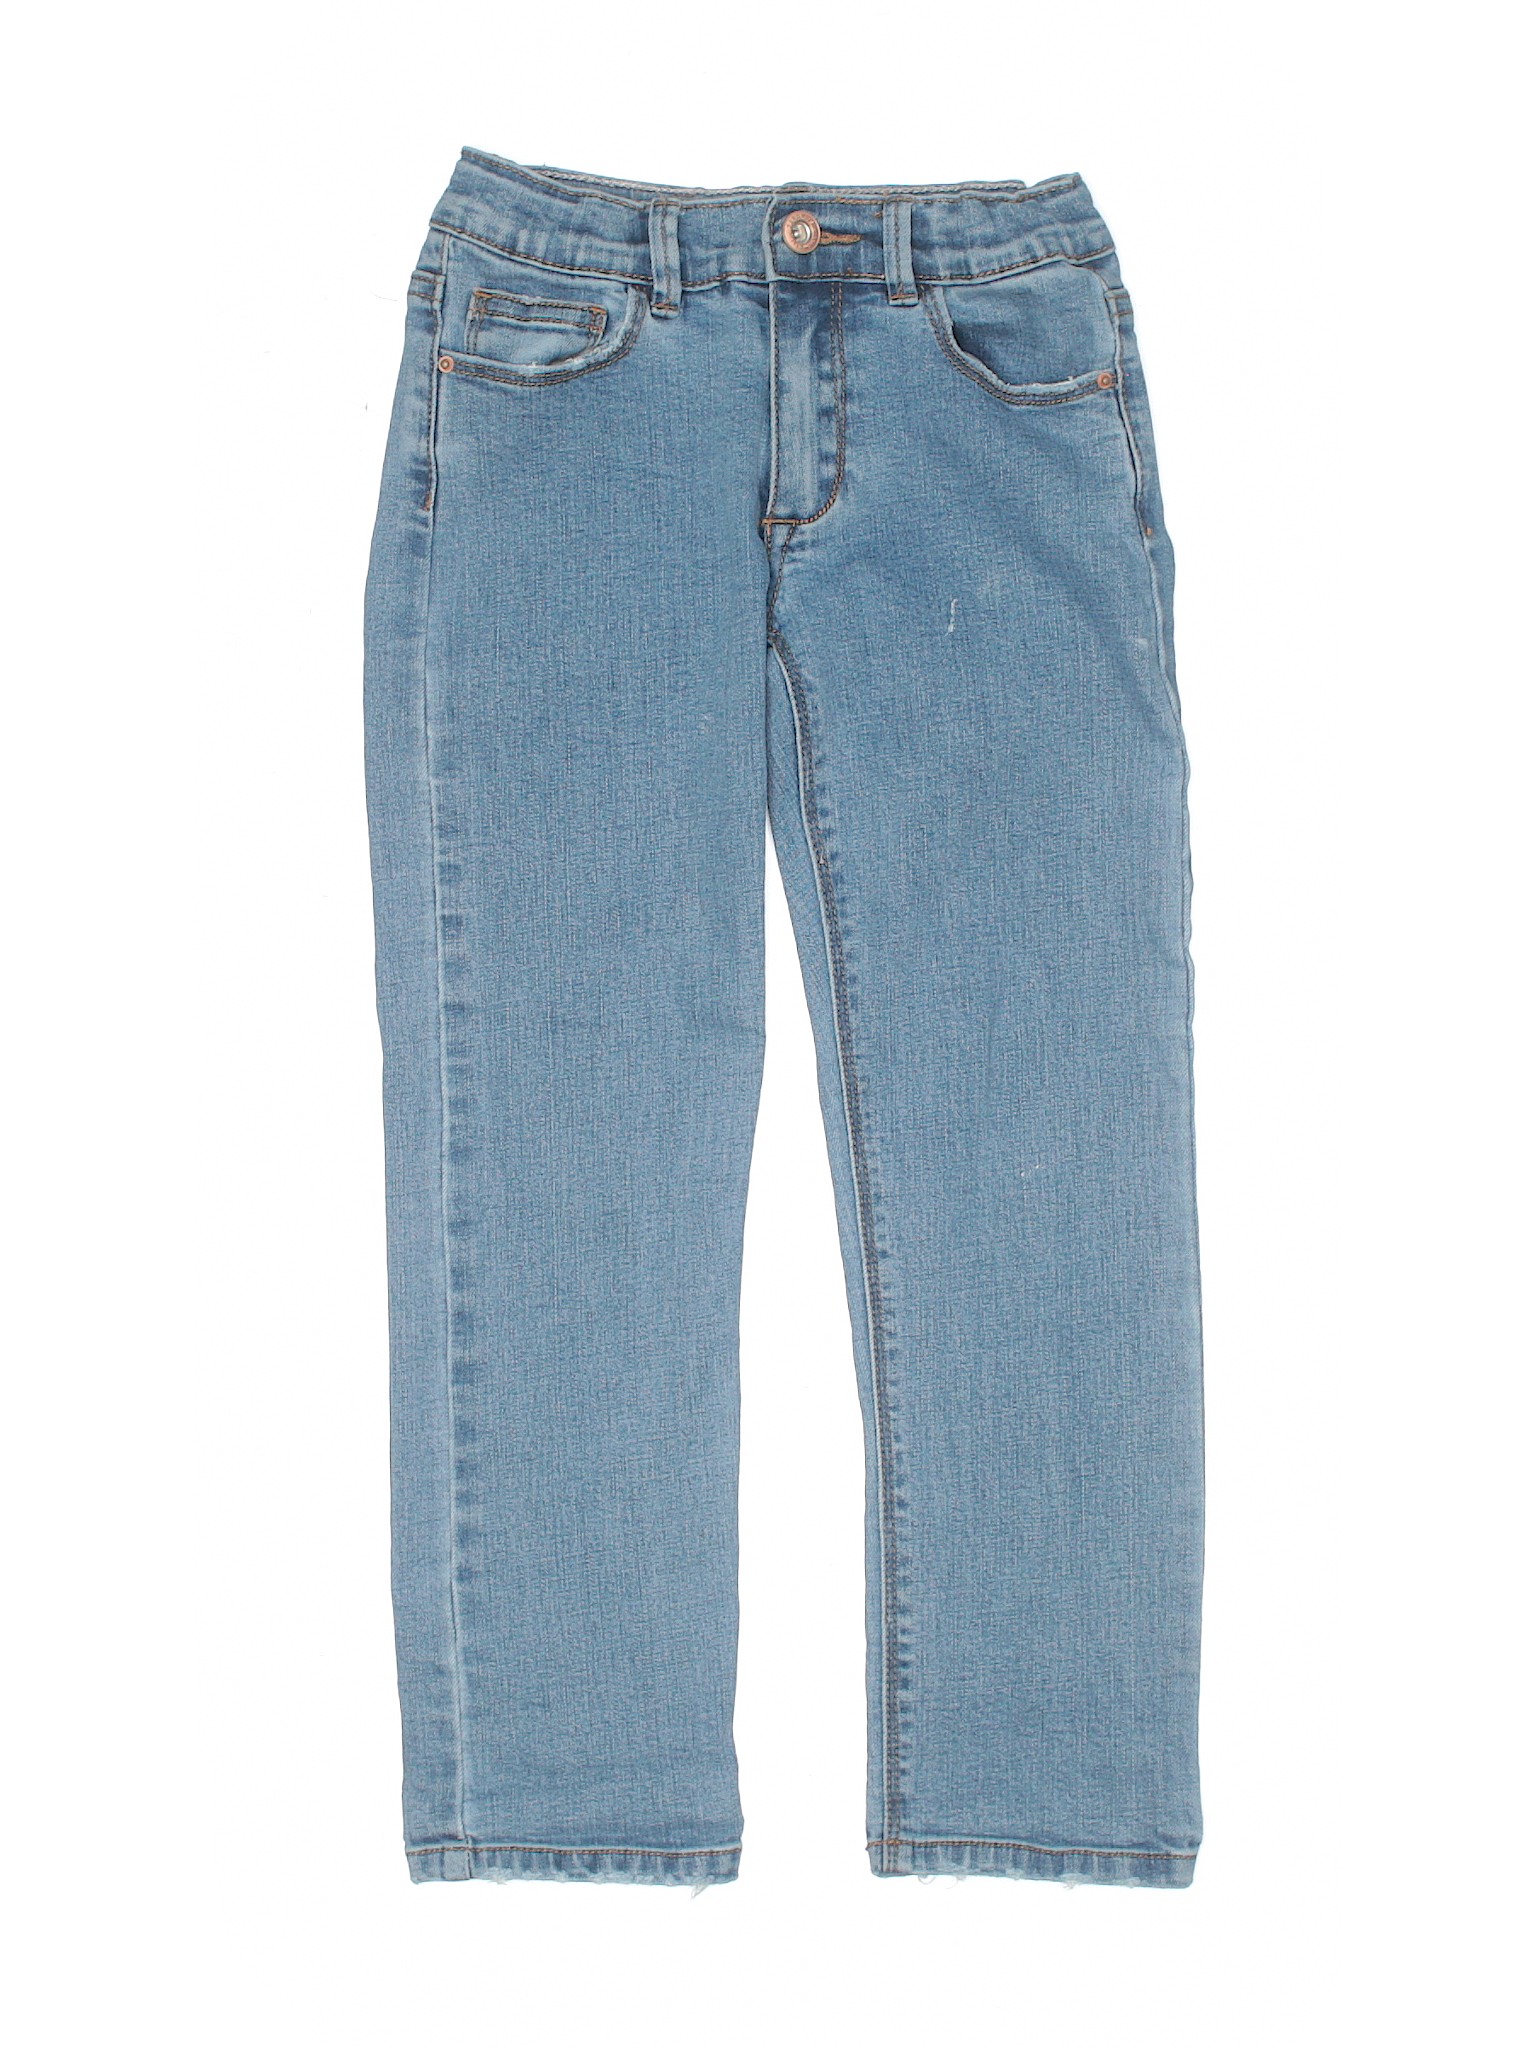 Zara Kids Girls Blue Jeans 7 | eBay